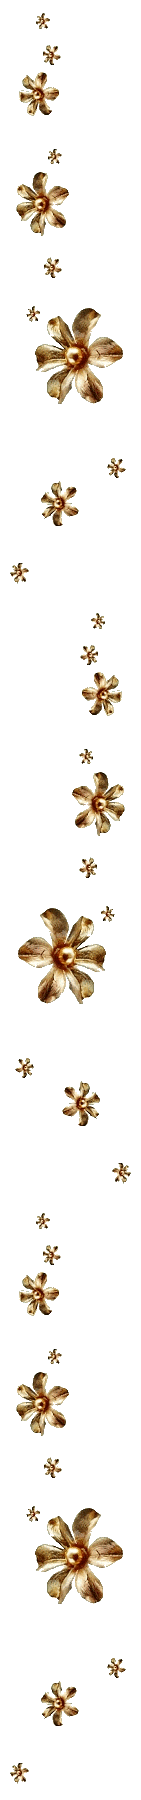 Guirlande de fleurs